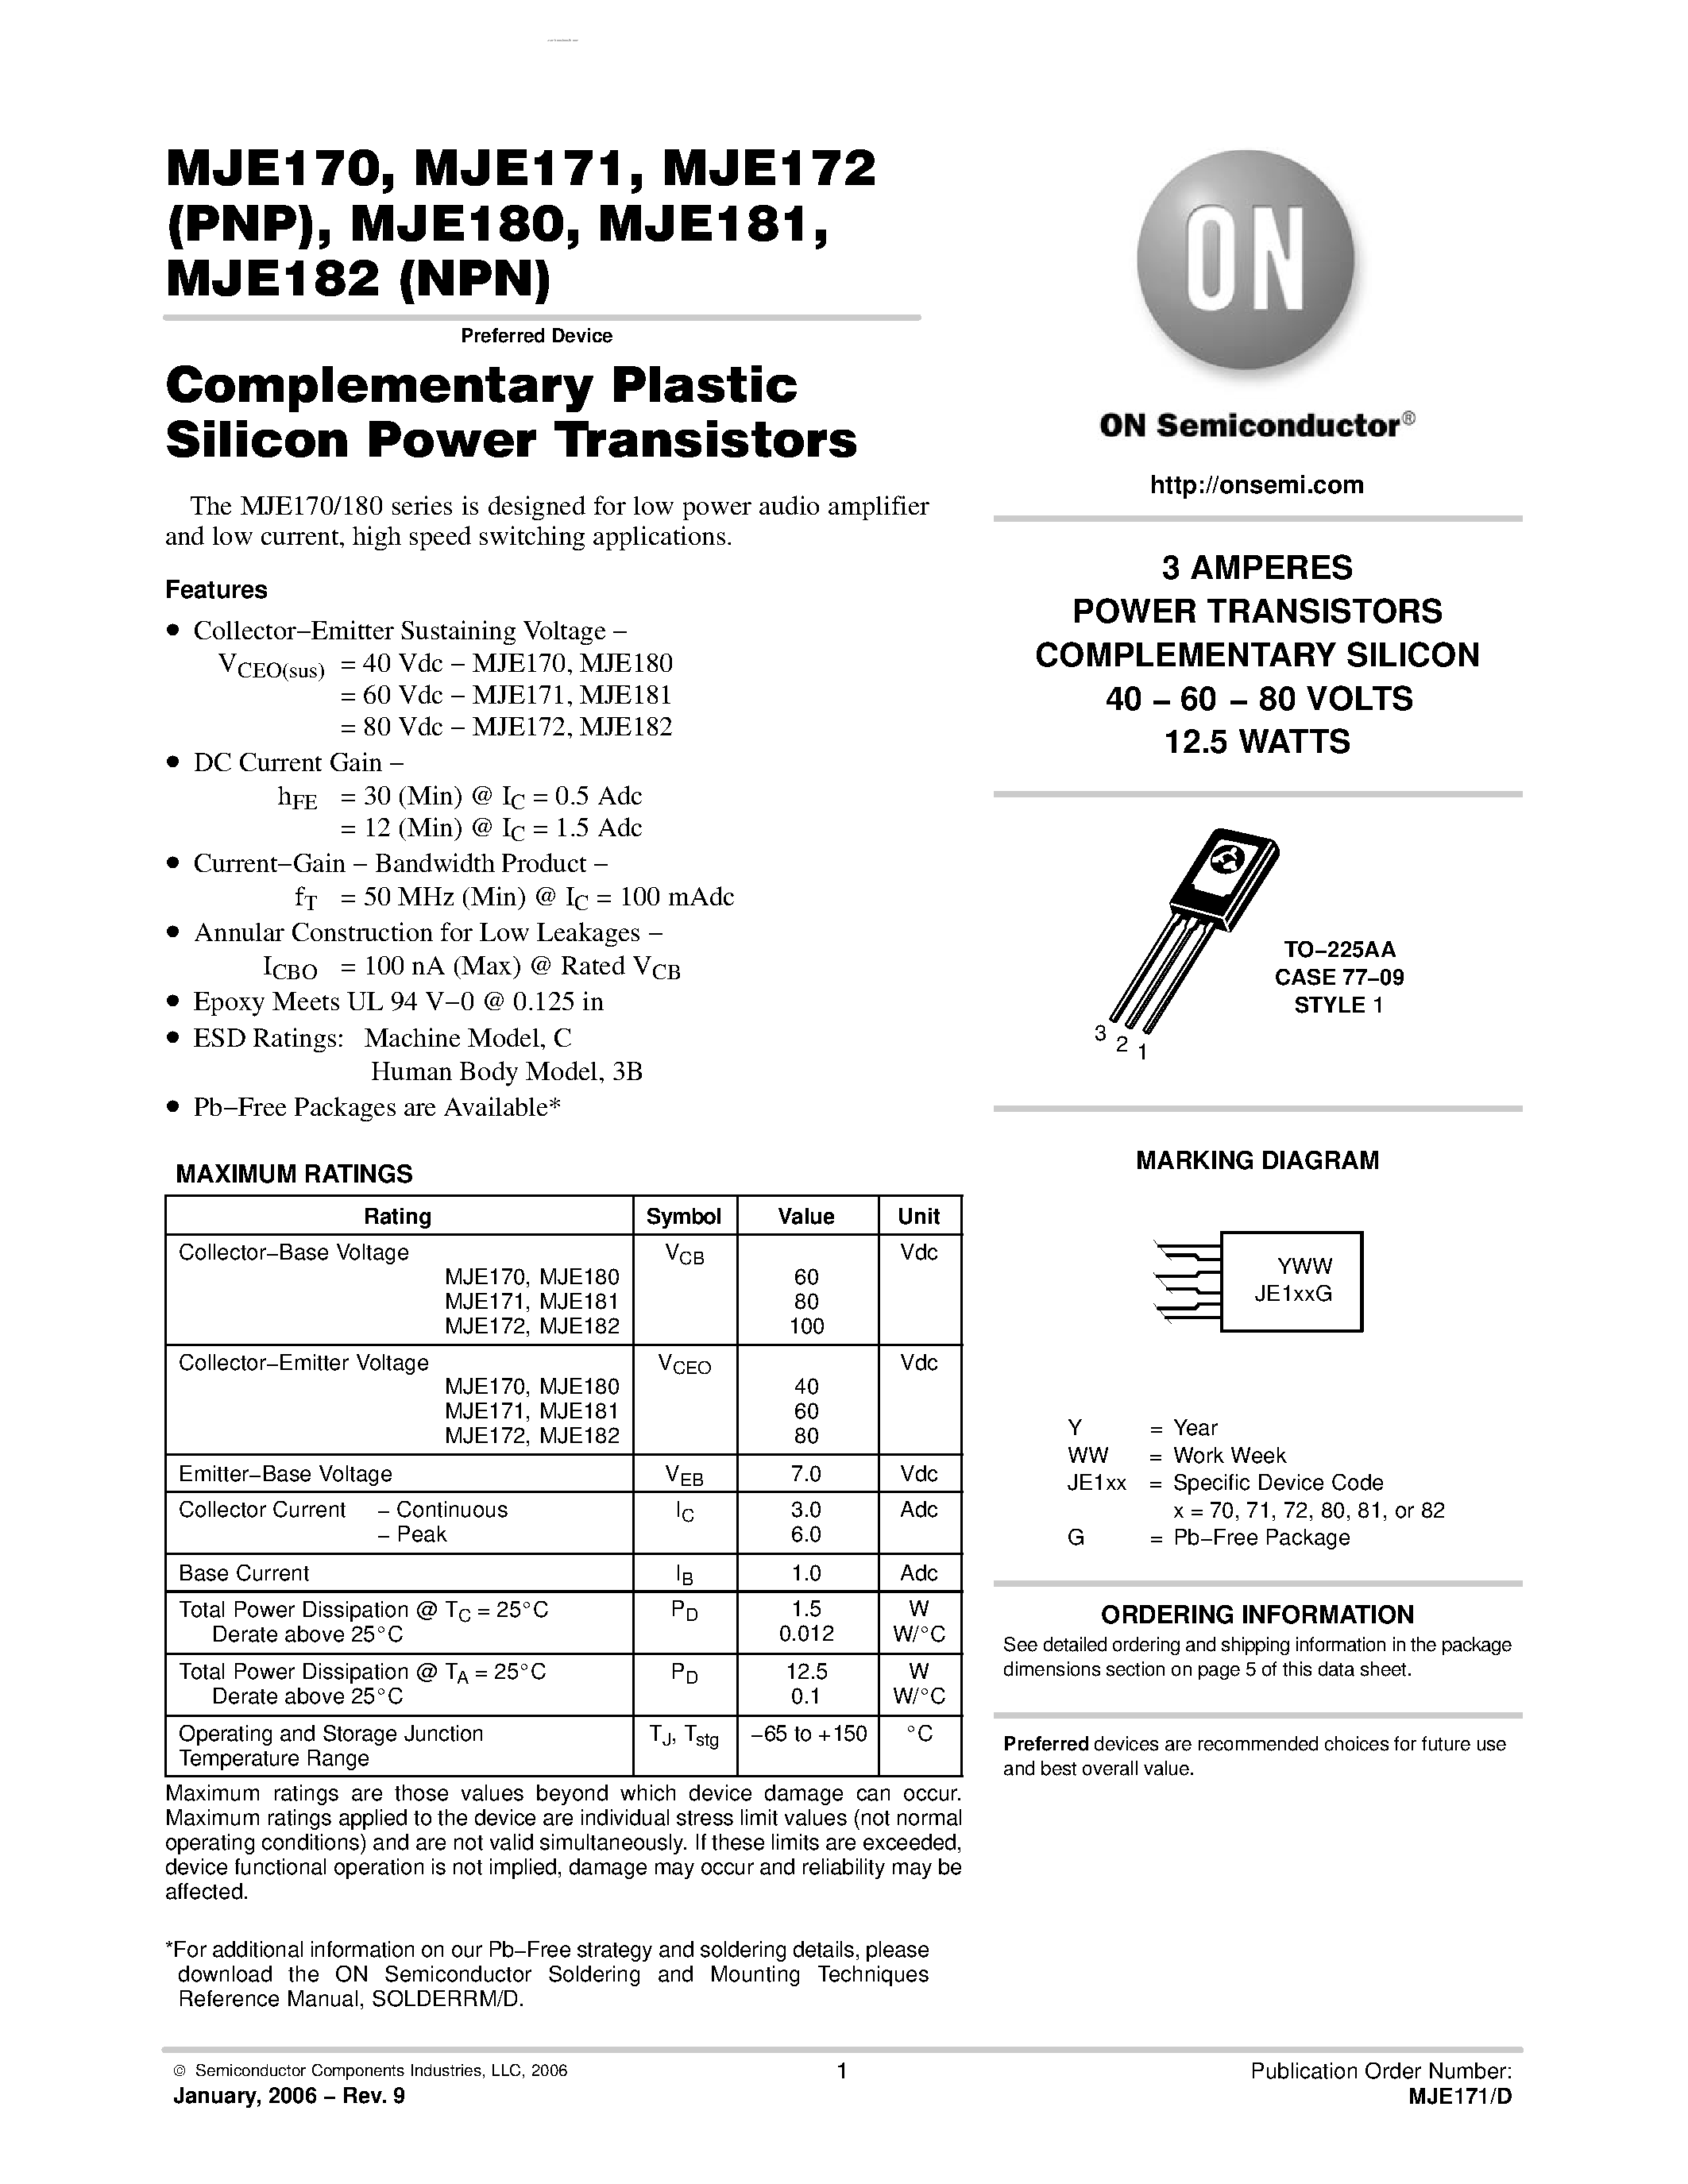 Даташит MJE170 - (MJE170 - MJE182) Complementary Plastic Silicon Power Transistors страница 1